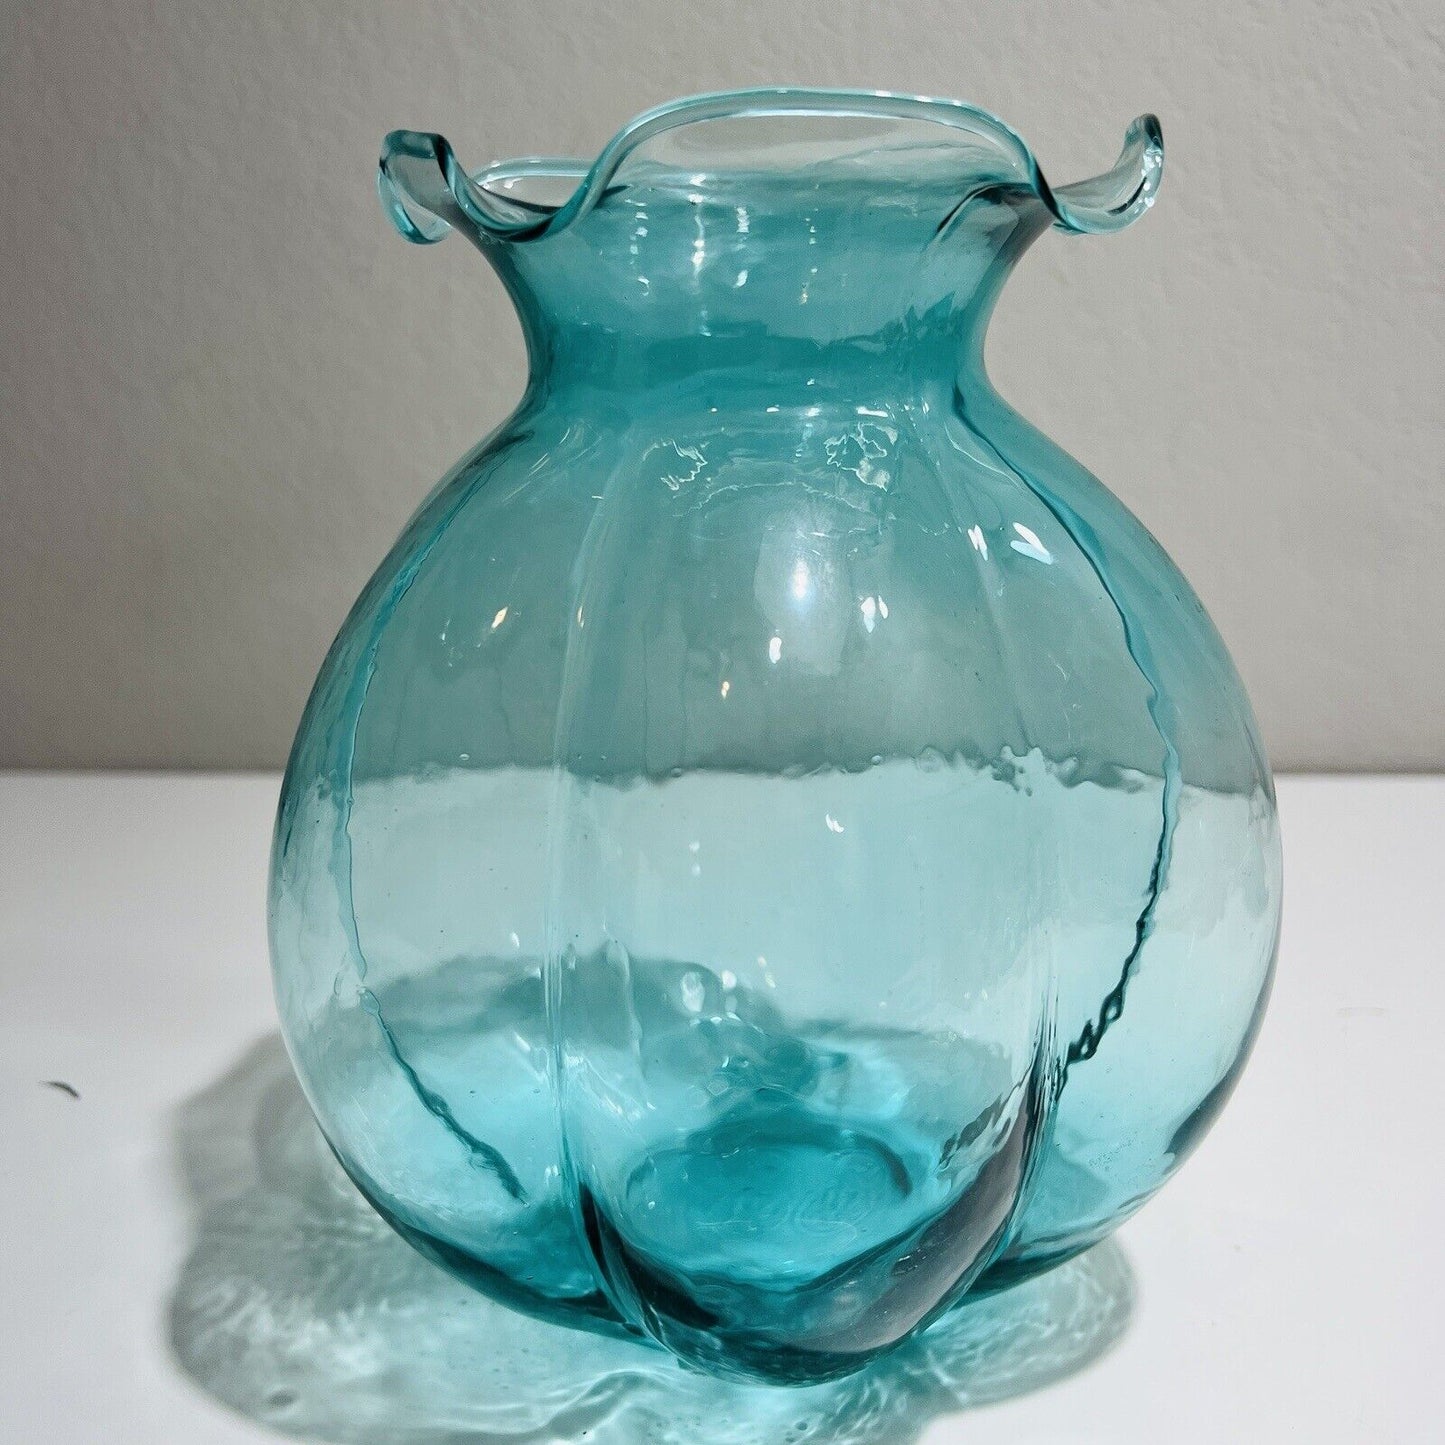 Vase Art Glass Round Teal Blue Melon Shape 1950 Vintage Home Decor